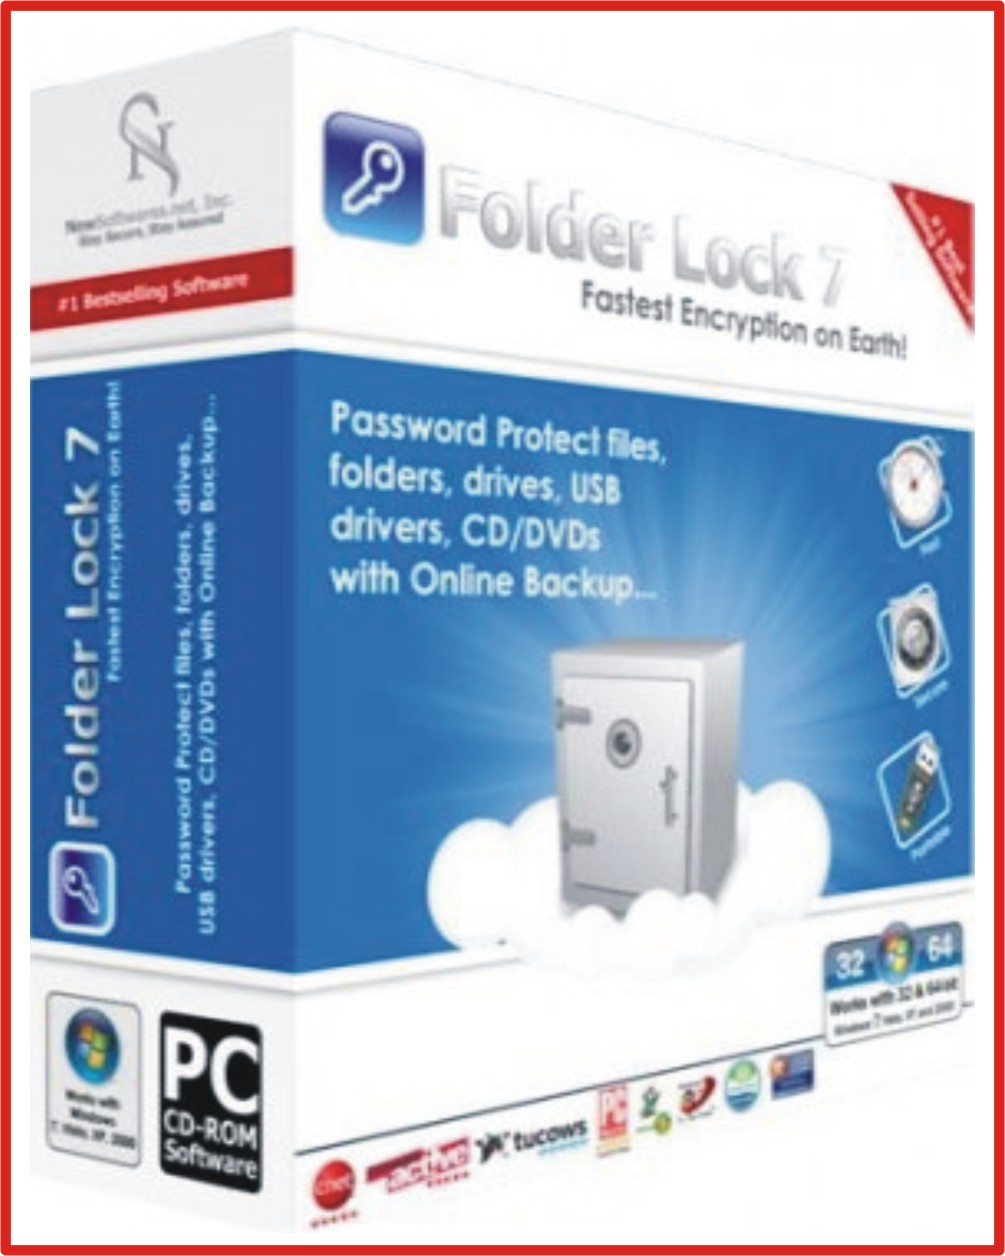 folder lock for windows 8 free download full version